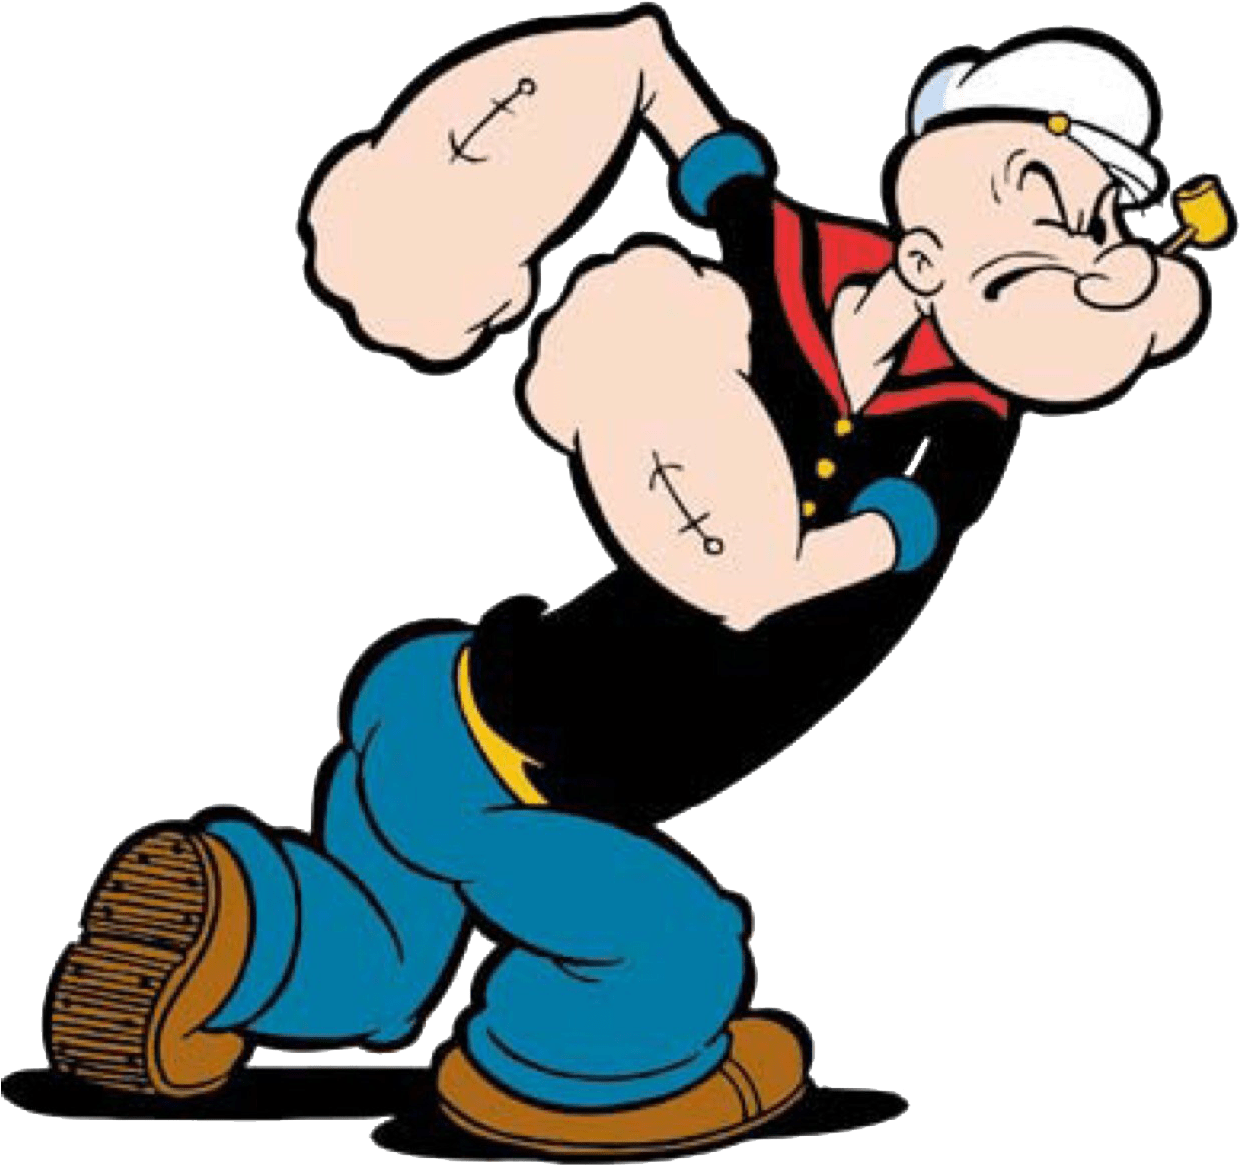 Popeye - Popeye The Sailor Man (1252x1252)